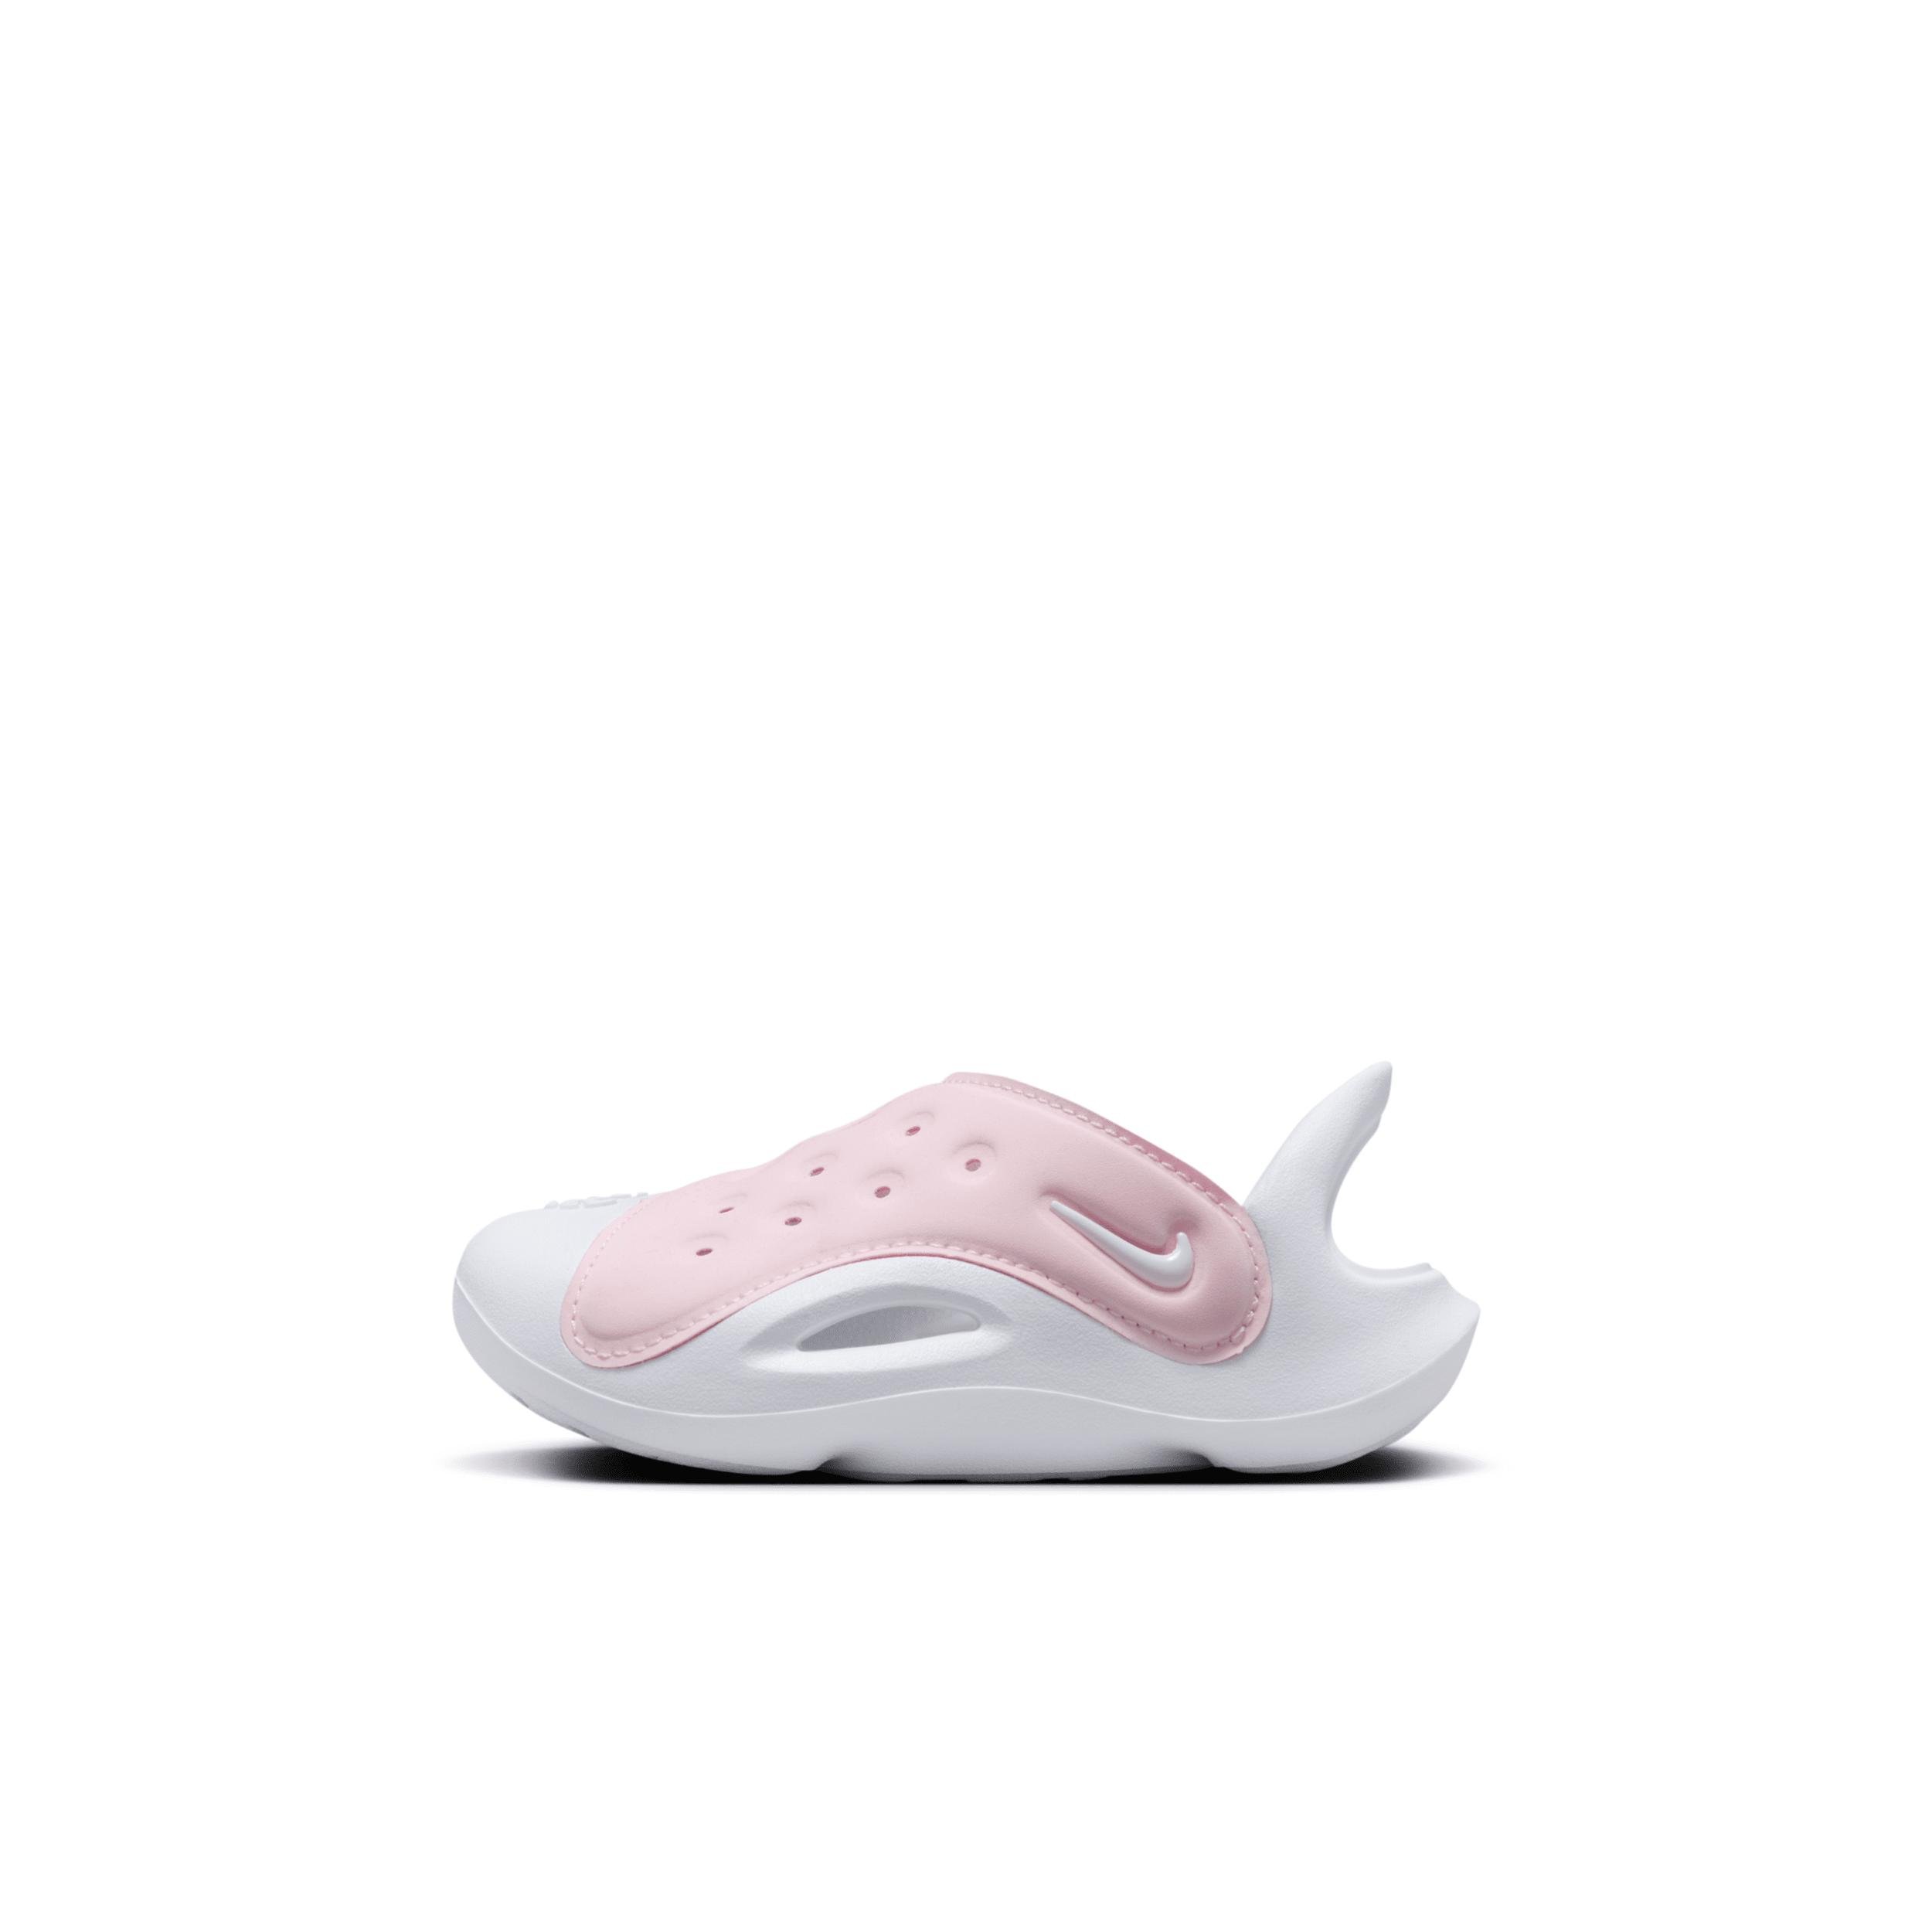 Nike Aqua Swoosh Baby/Toddler Sandals by NIKE